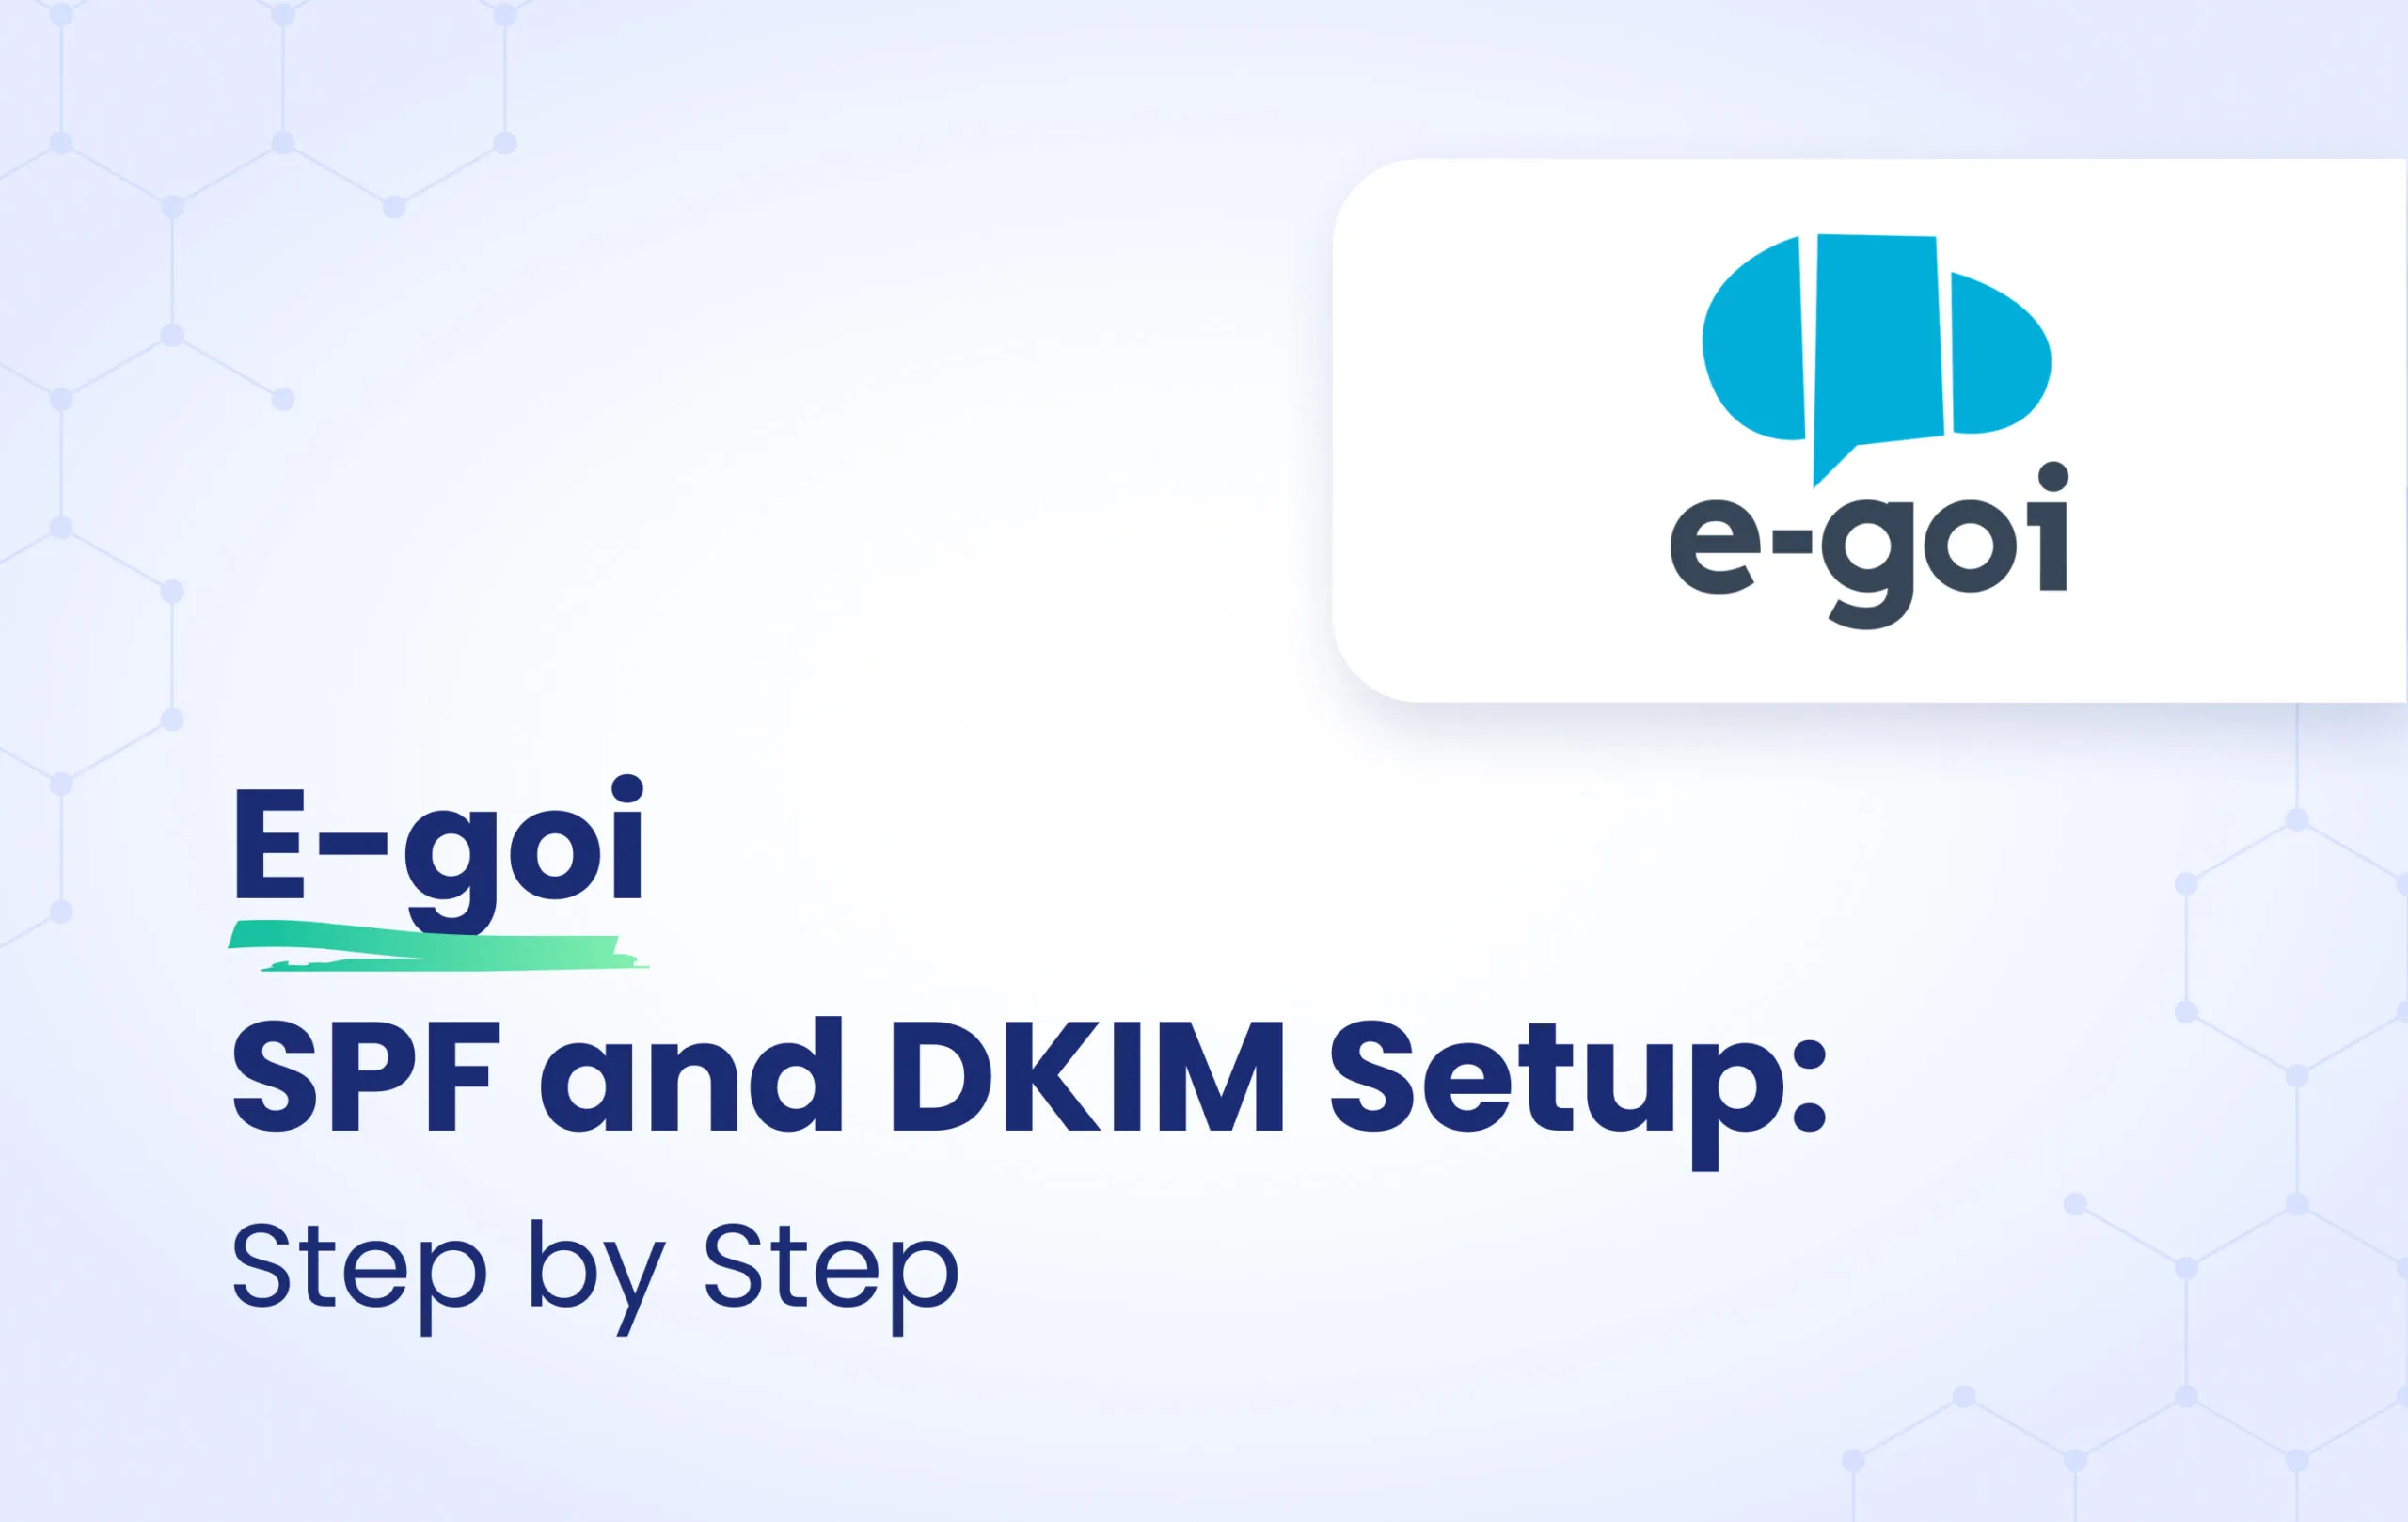 E-goi SPF and DKIM configuration